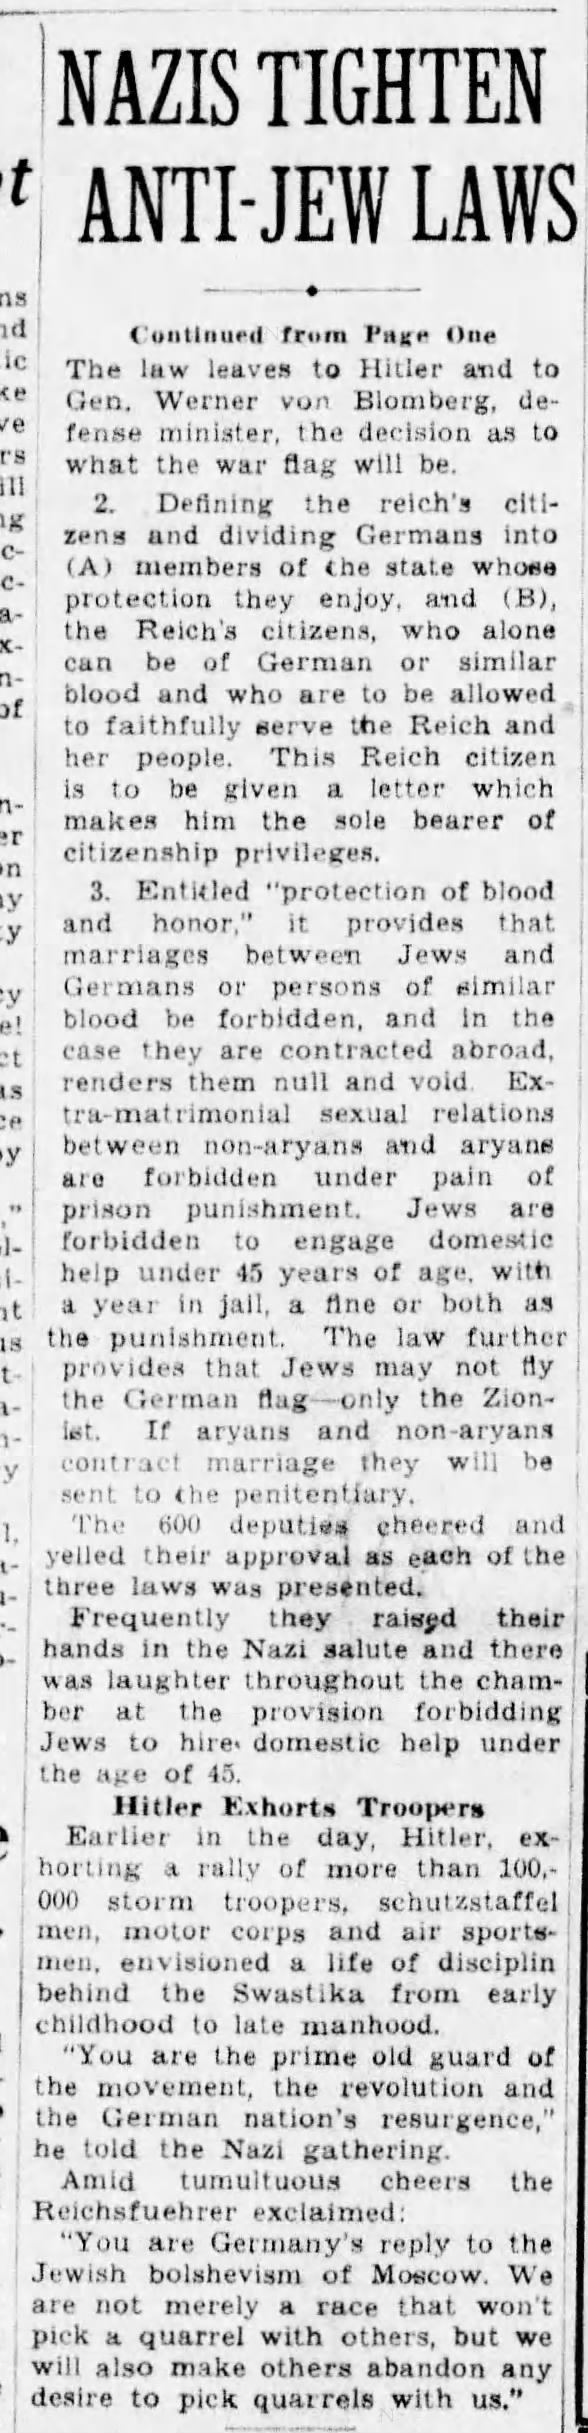 Germany Denies Jews Citizenship - Sept 16, 1935 Page 2